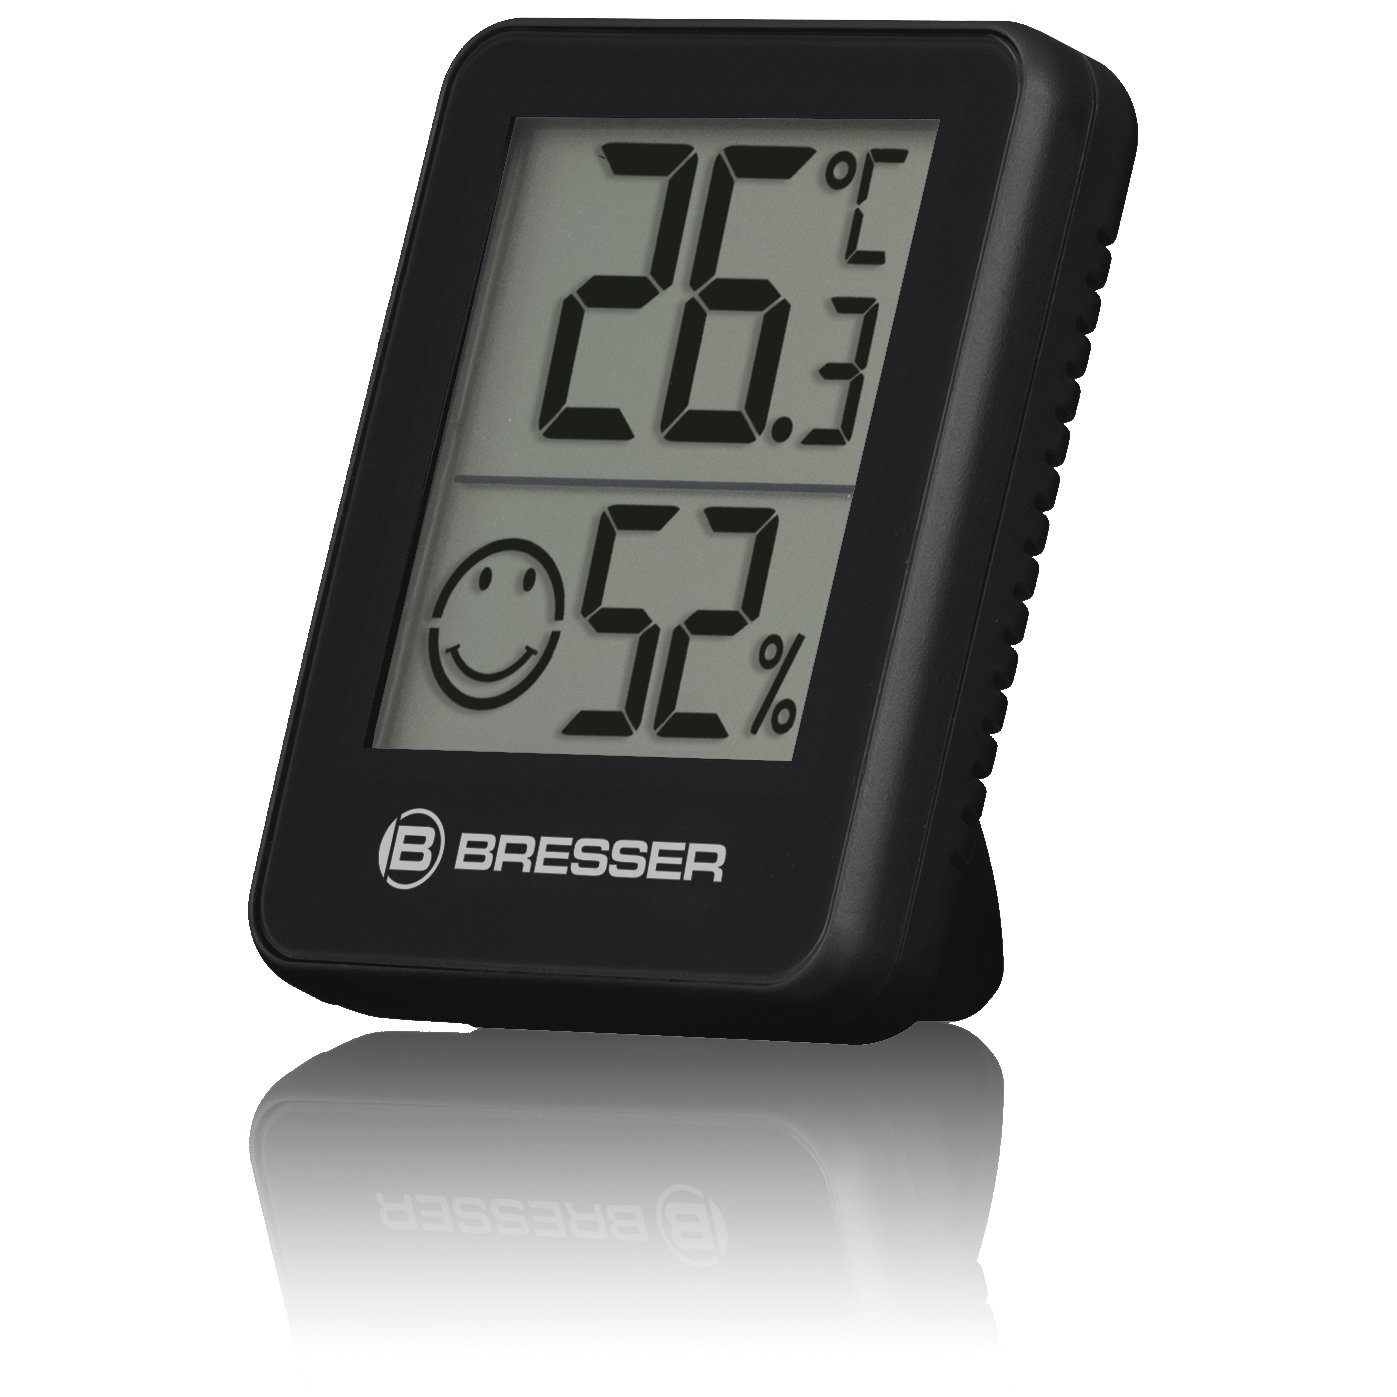 Temeo Hygro 3er Set Temperaturmessgerät Hygrometer schwarz Thermometer Indikator BRESSER /